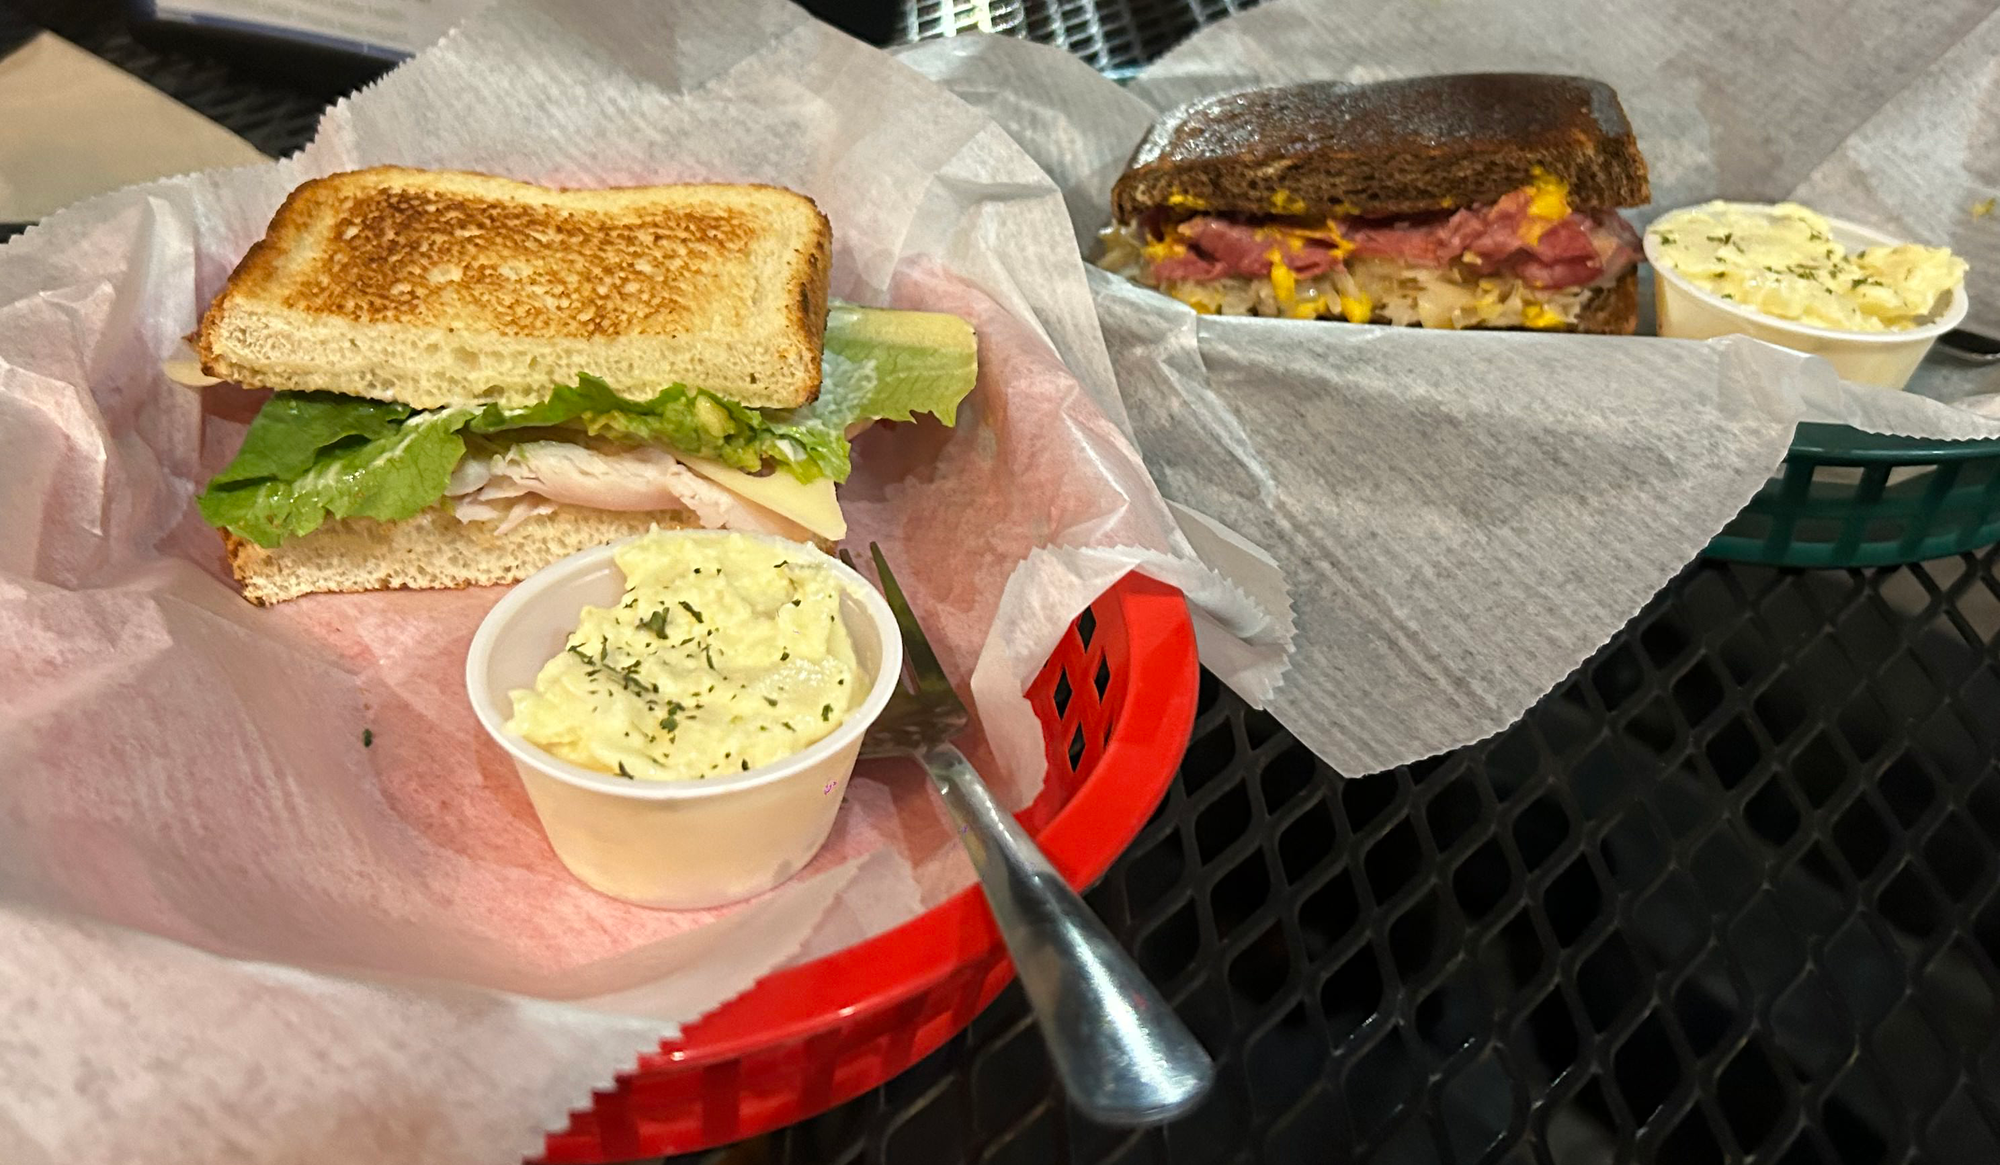 California club sandwich and Rueben sandwich